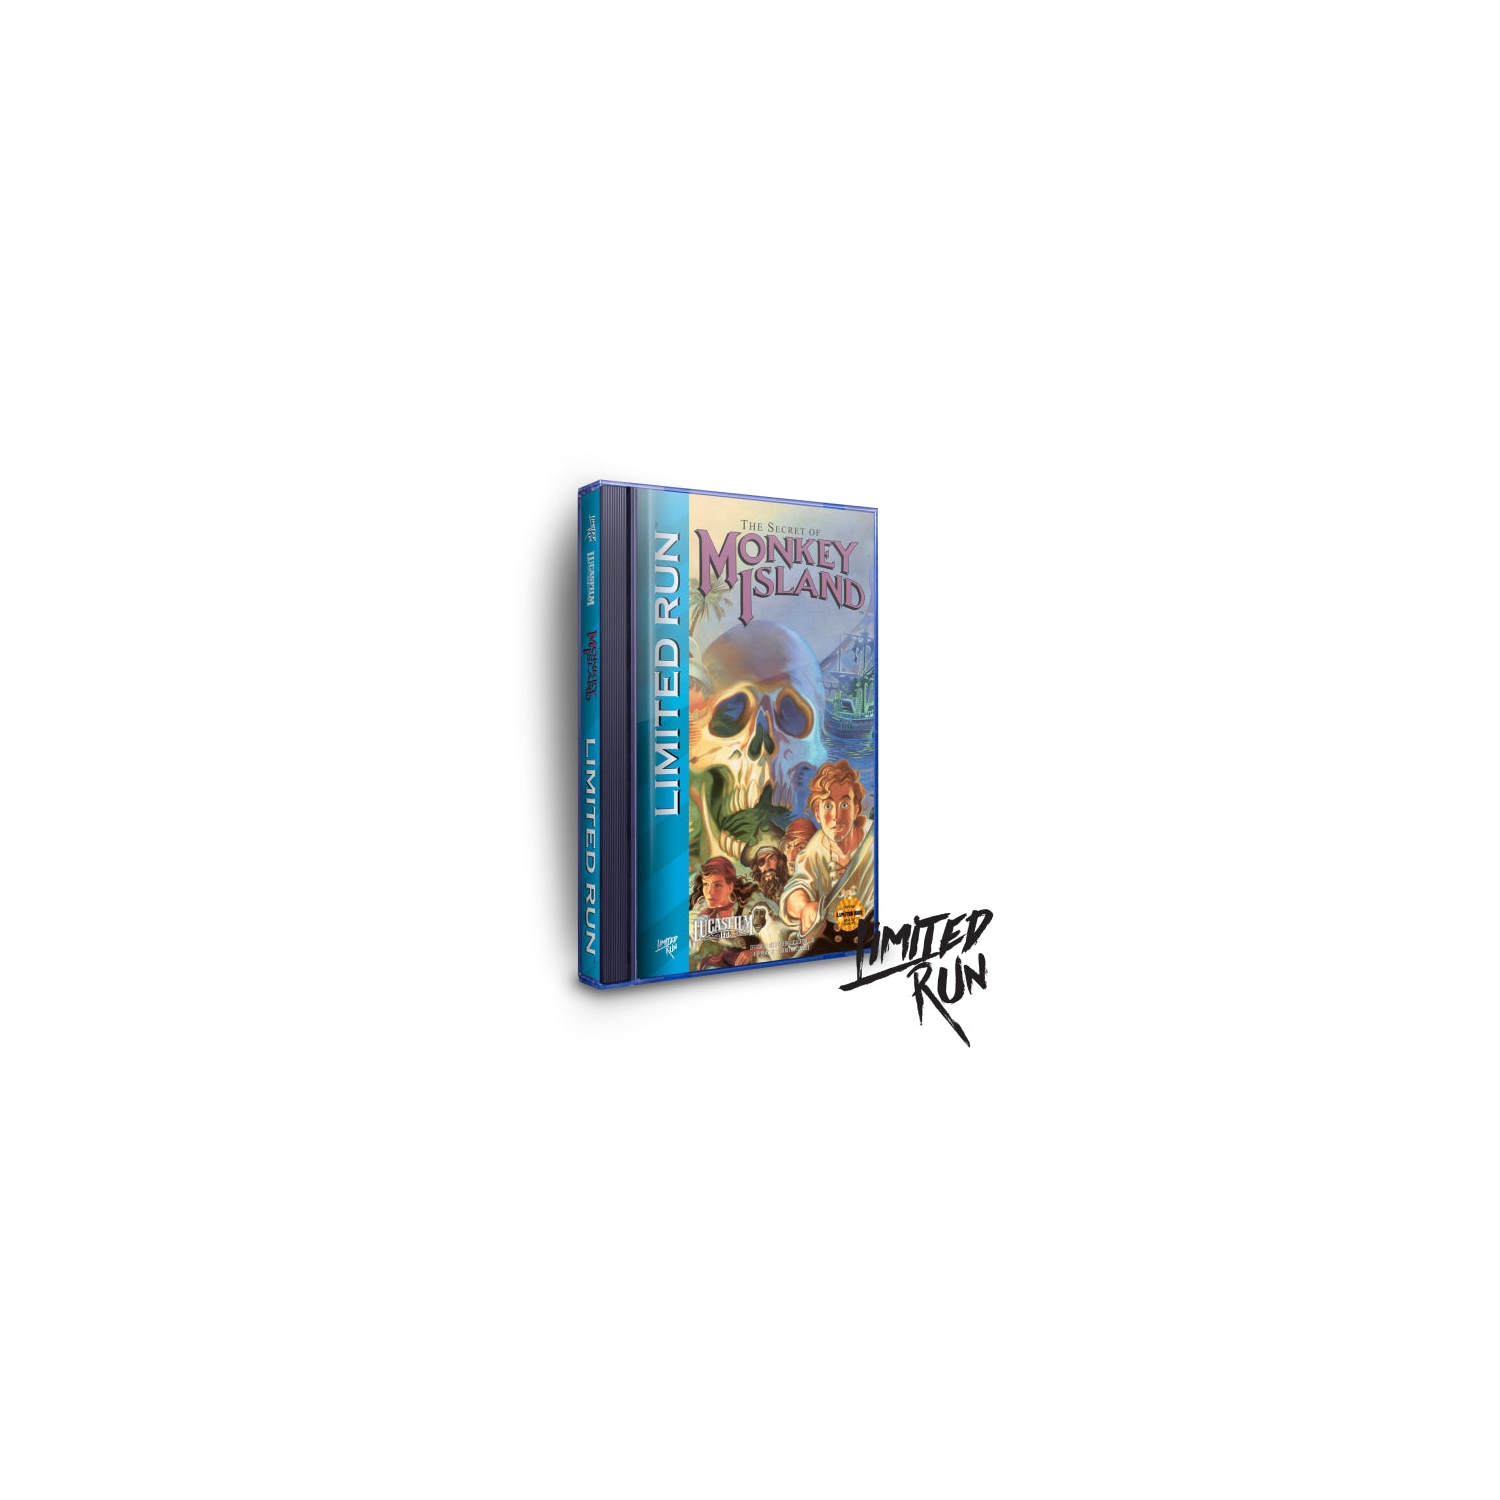 The Secret Of Monkey Island - Classic Edition [Sega CD]